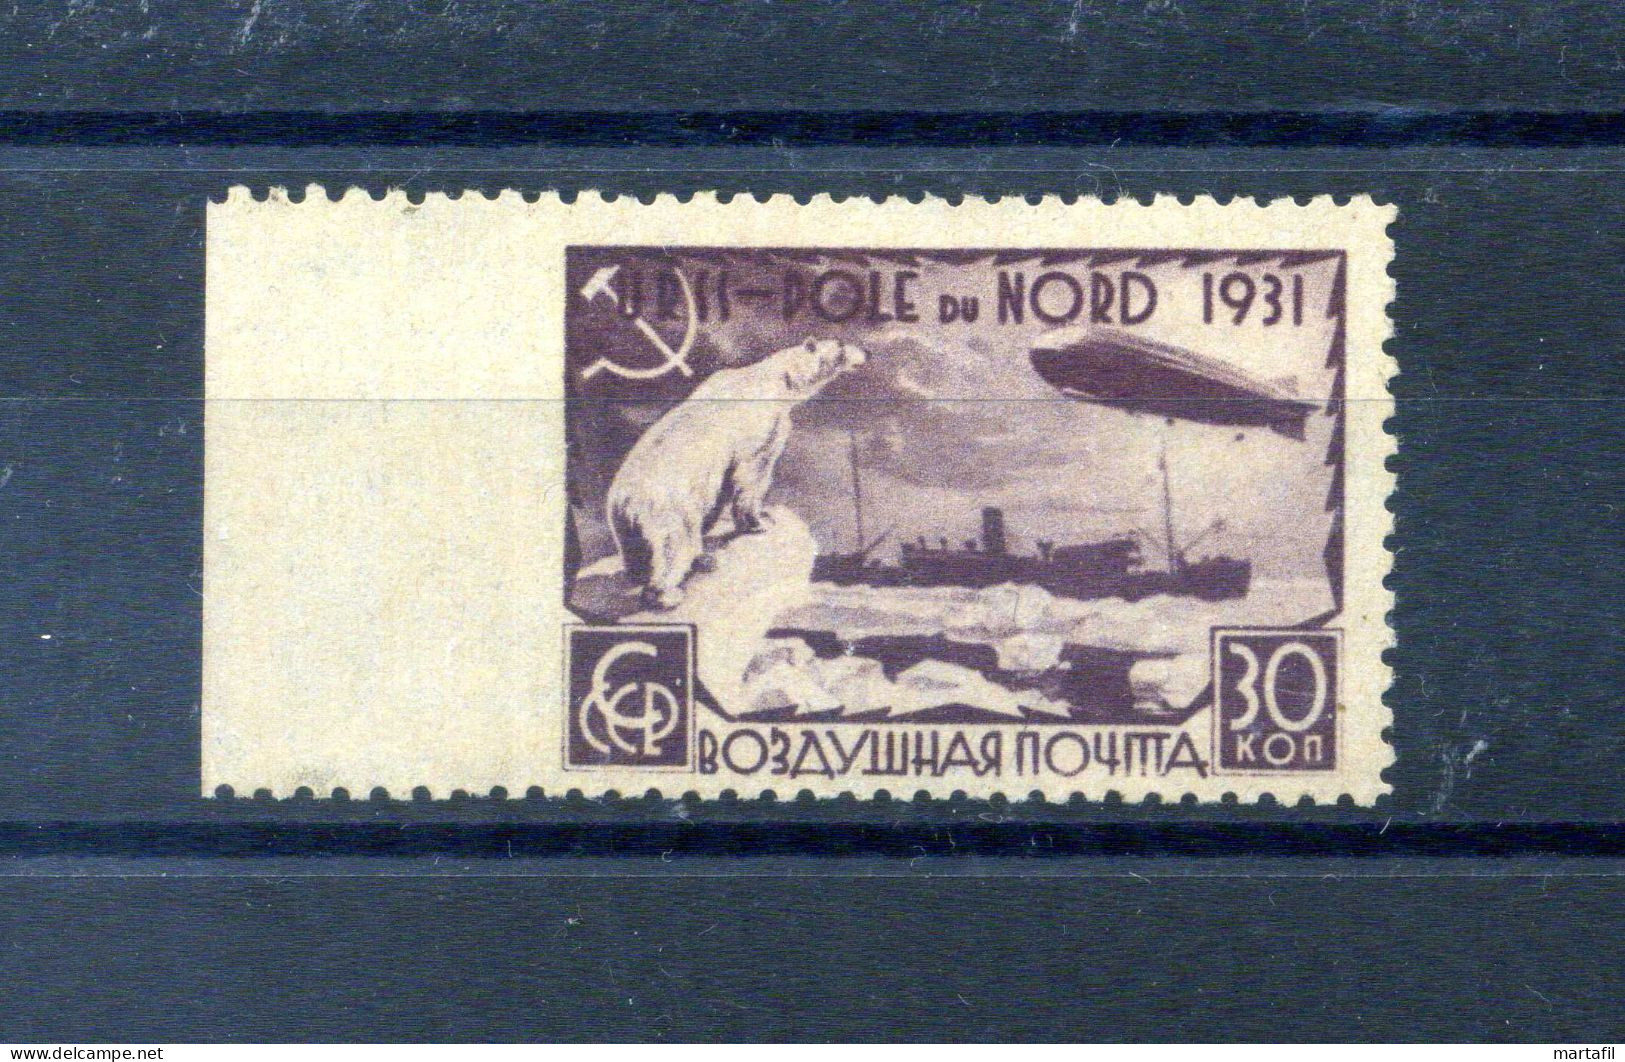 1931 URSS A27 30k. MNH ** Varietà - Non Dentellato A Sinistra - Timbrino Kubler - Graf Zeppelin Polo Nord - Variétés & Curiosités